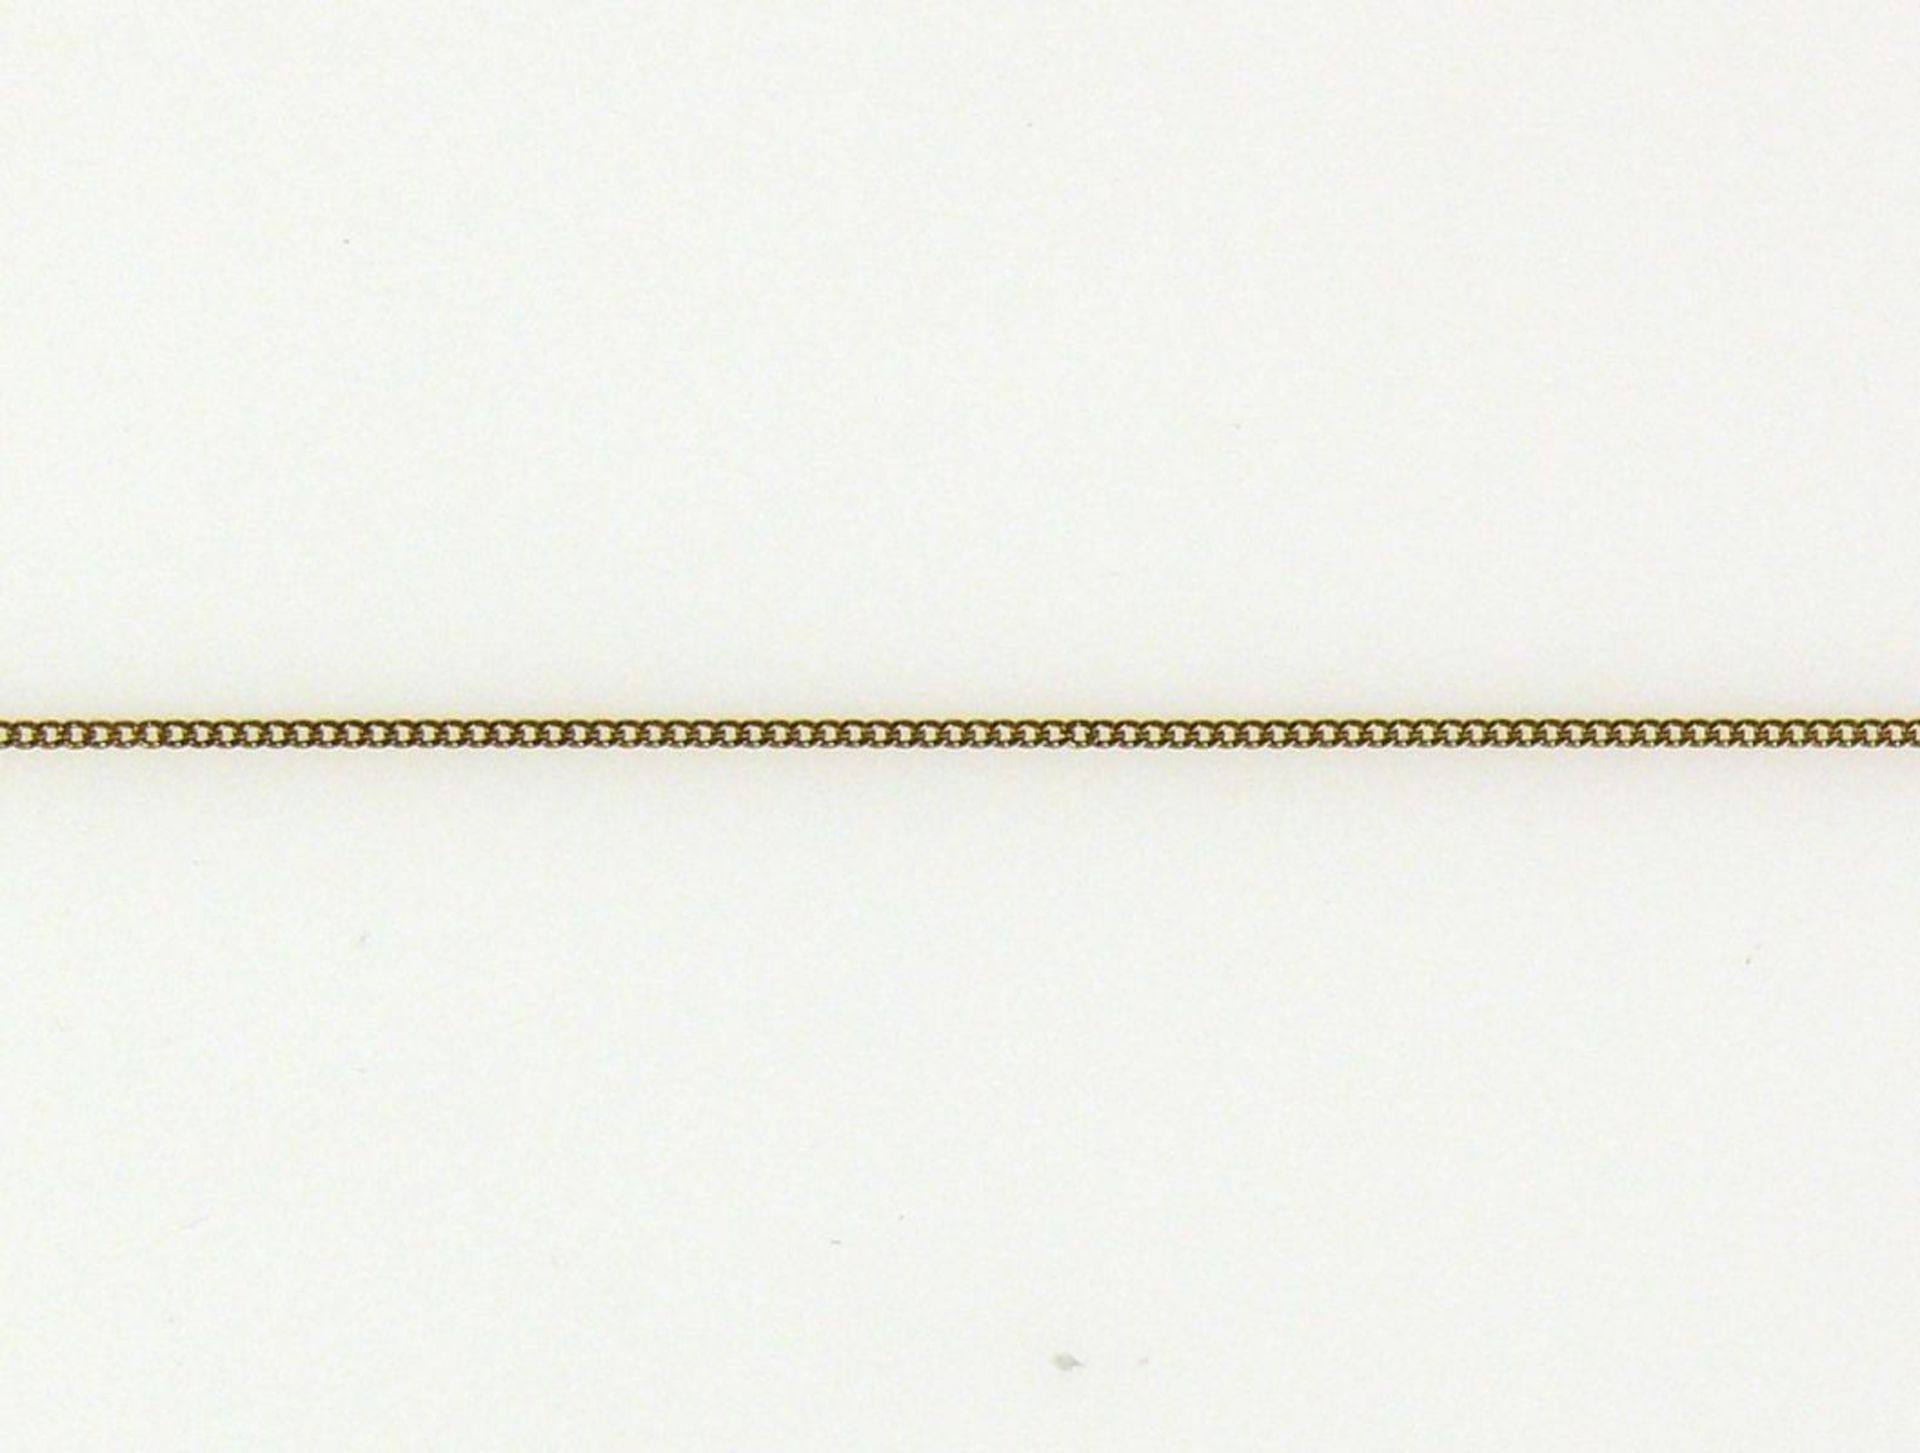 Halskette 18ct GG; gestempelt CB (Carl Bucherer); L: 43 cm; 2,9g